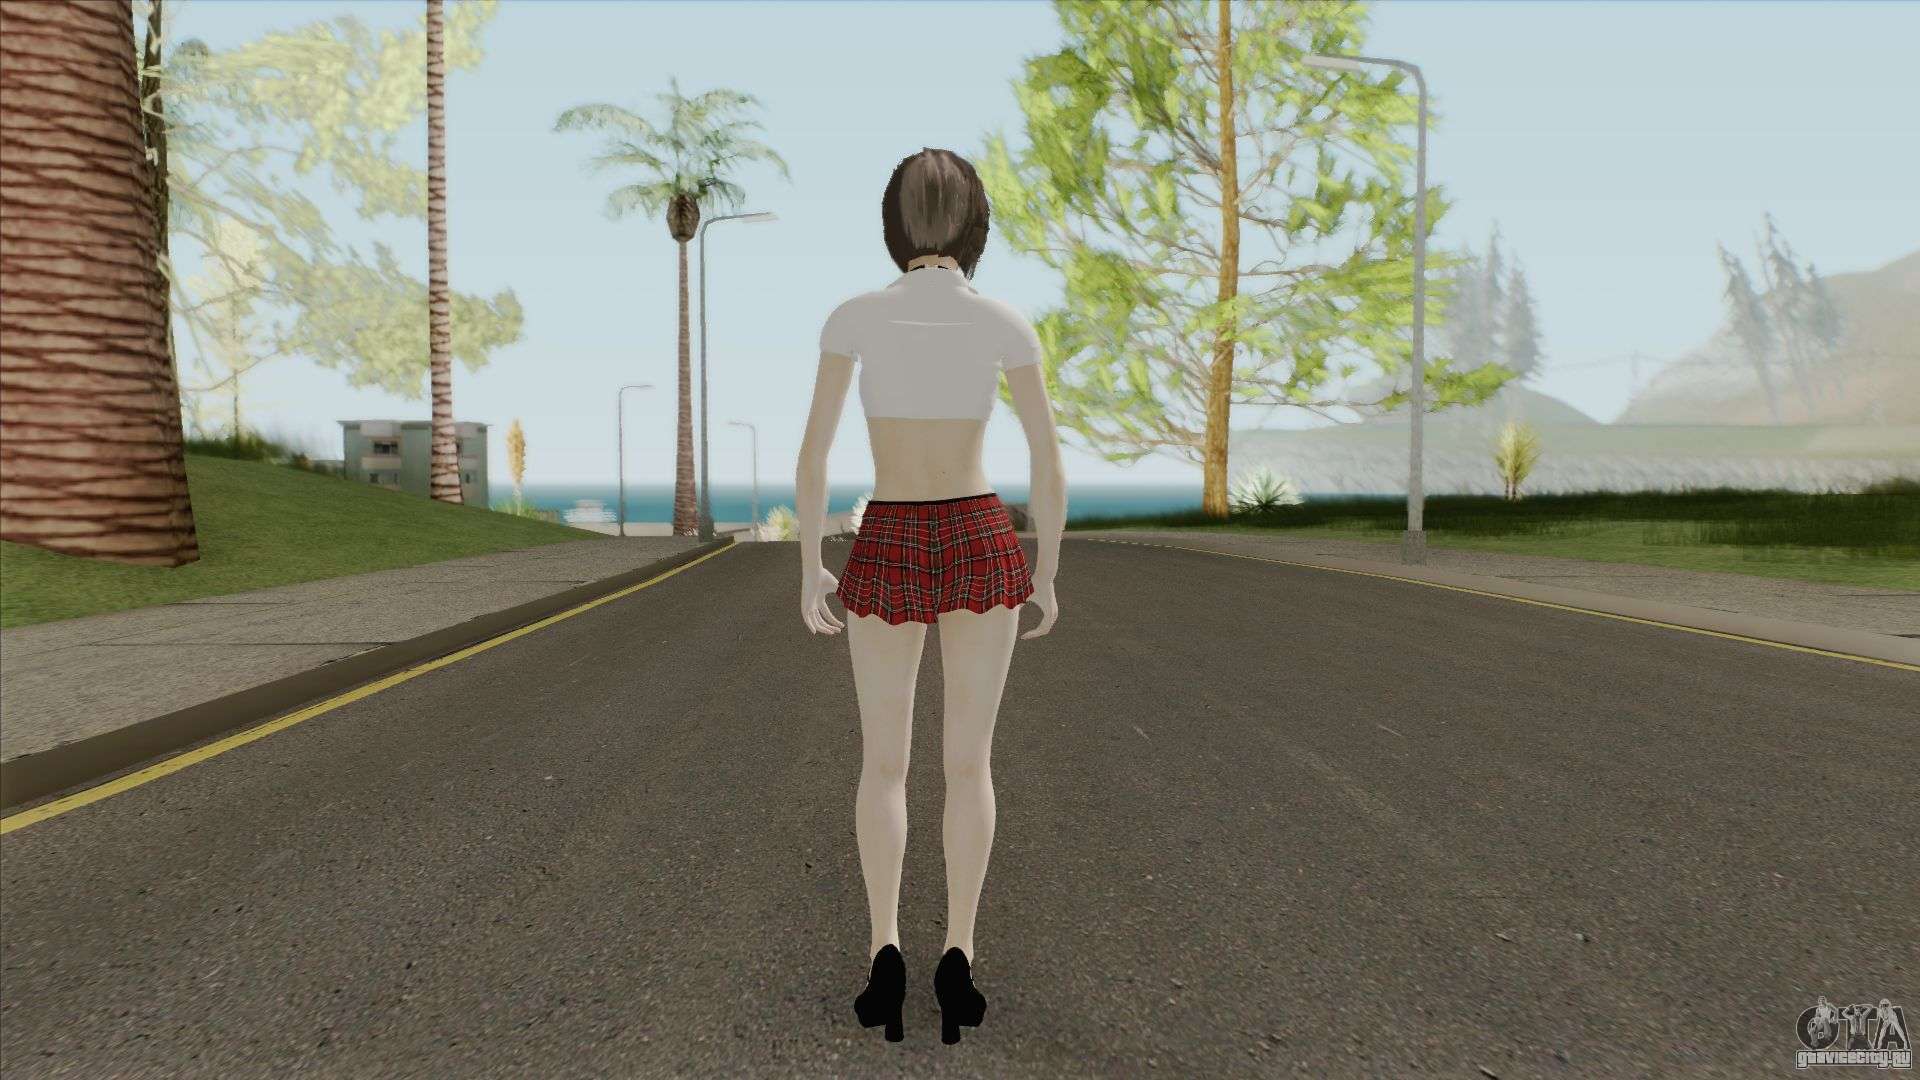 Ada Wong Schoolgirl (RE2 Remake) pour GTA San Andreas